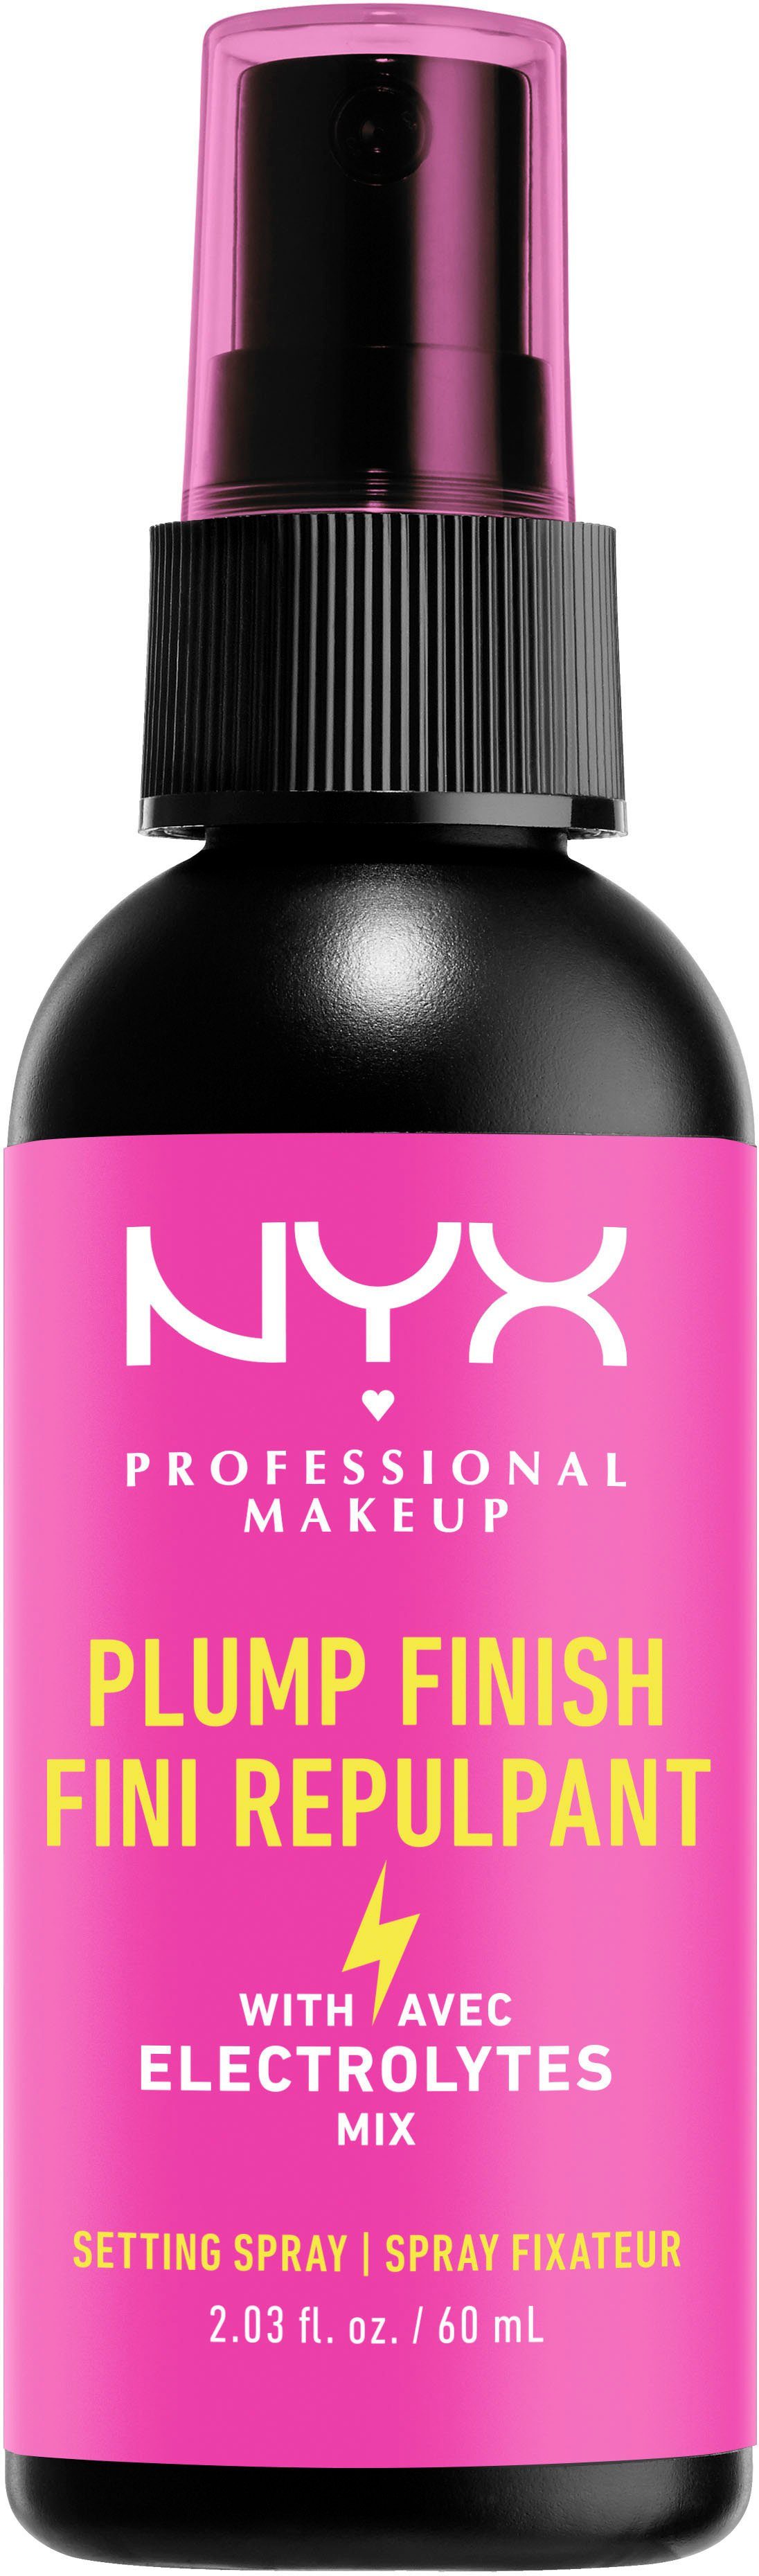 NYX Gesichtsspray Professional Setting Spray, Makeup Finish mit Hyaluron Plump